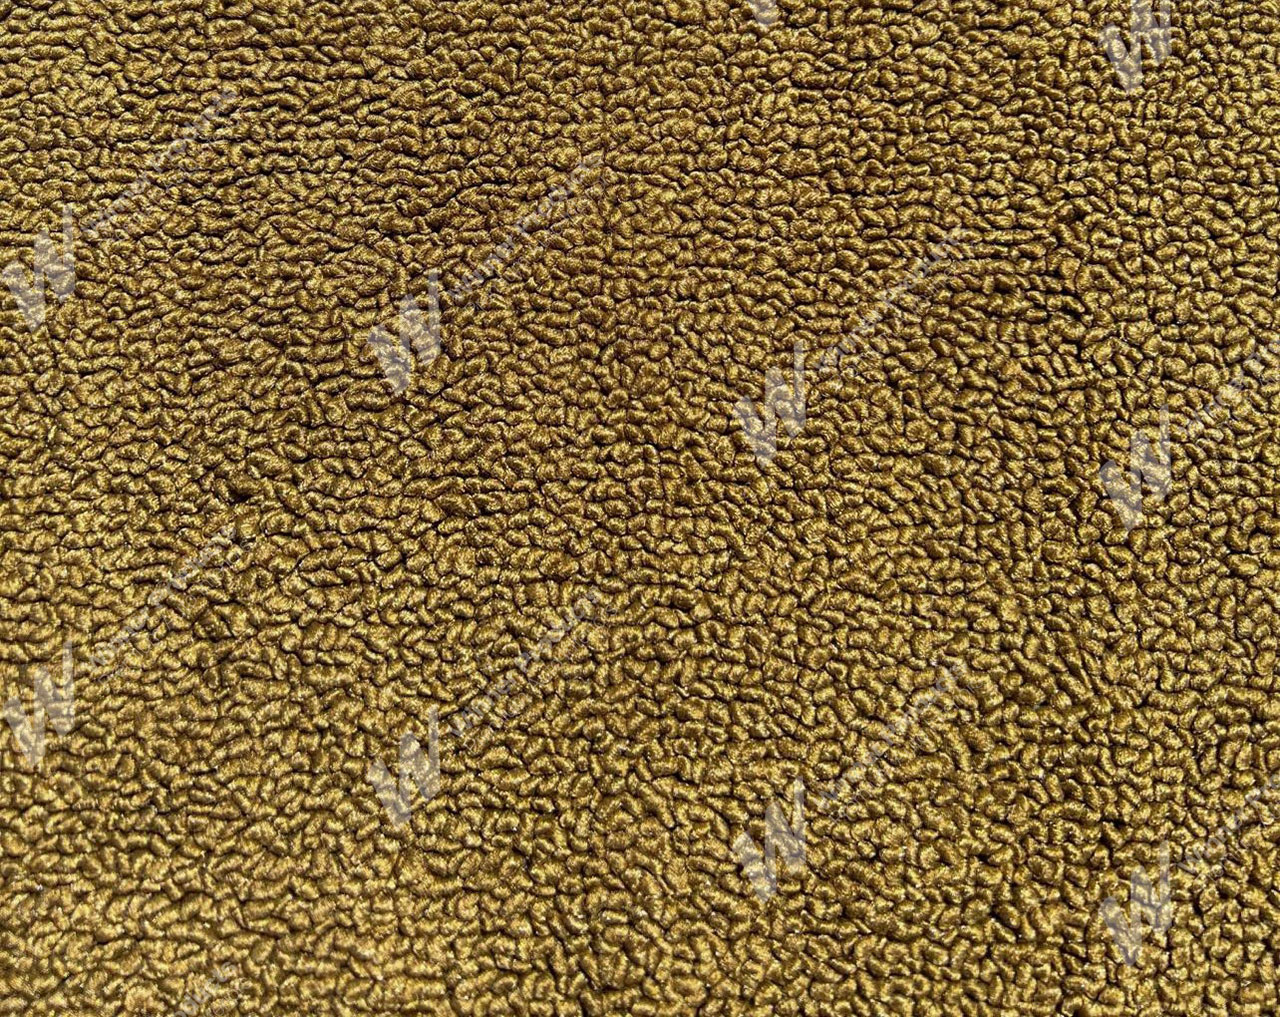 Holden Kingswood HG Kingswood Ute 11G Antique Gold & Castillion Weave Carpet (Image 1 of 1)